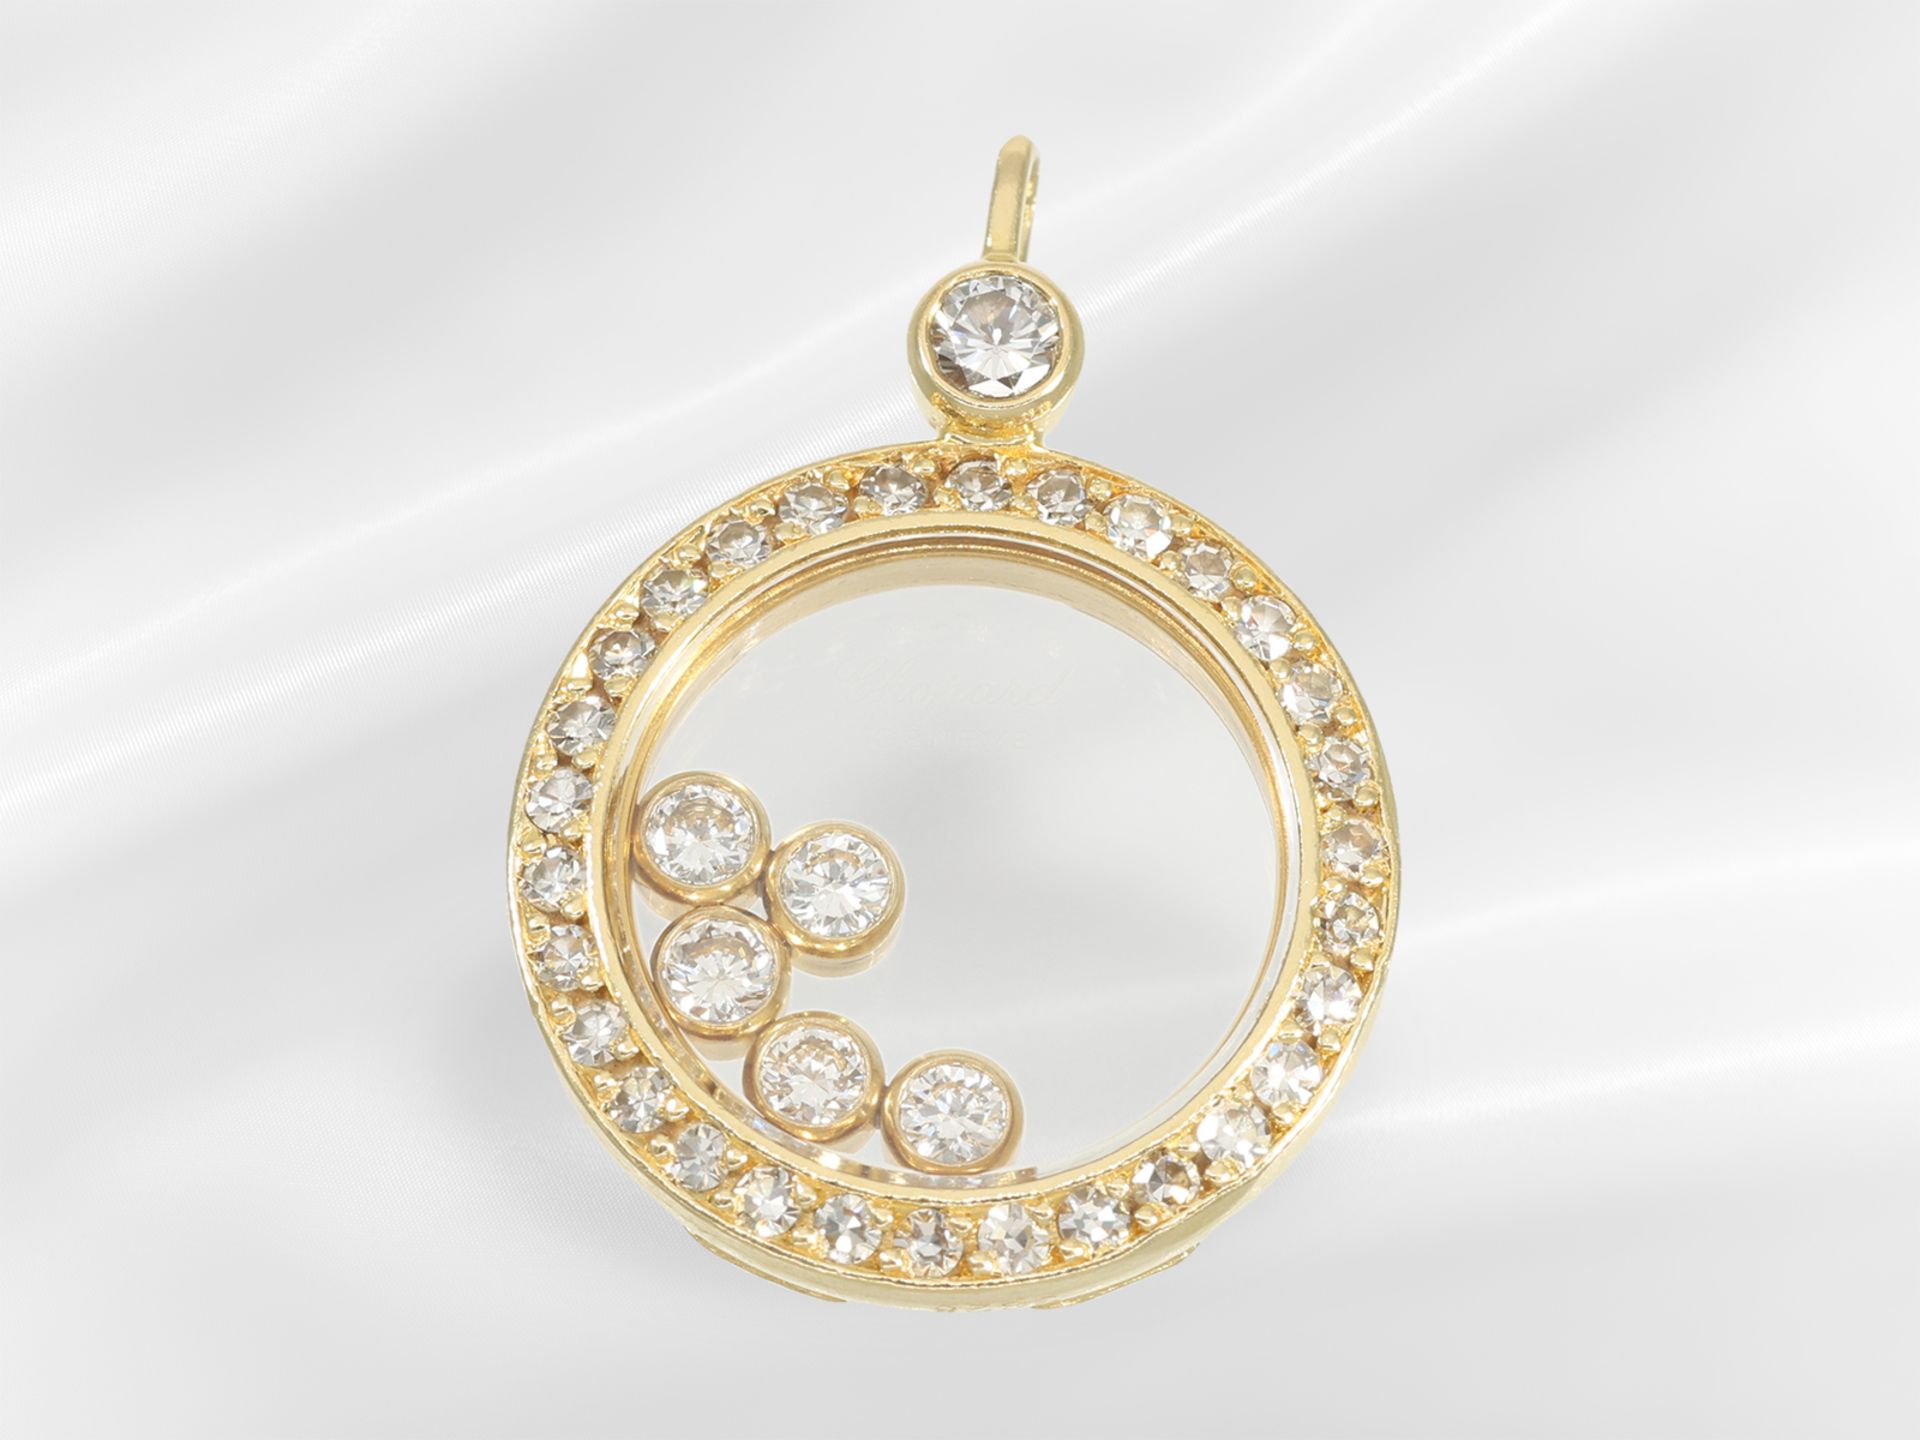 Pendant: luxurious Chopard "Happy Diamonds" pendant, 18K yellow gold